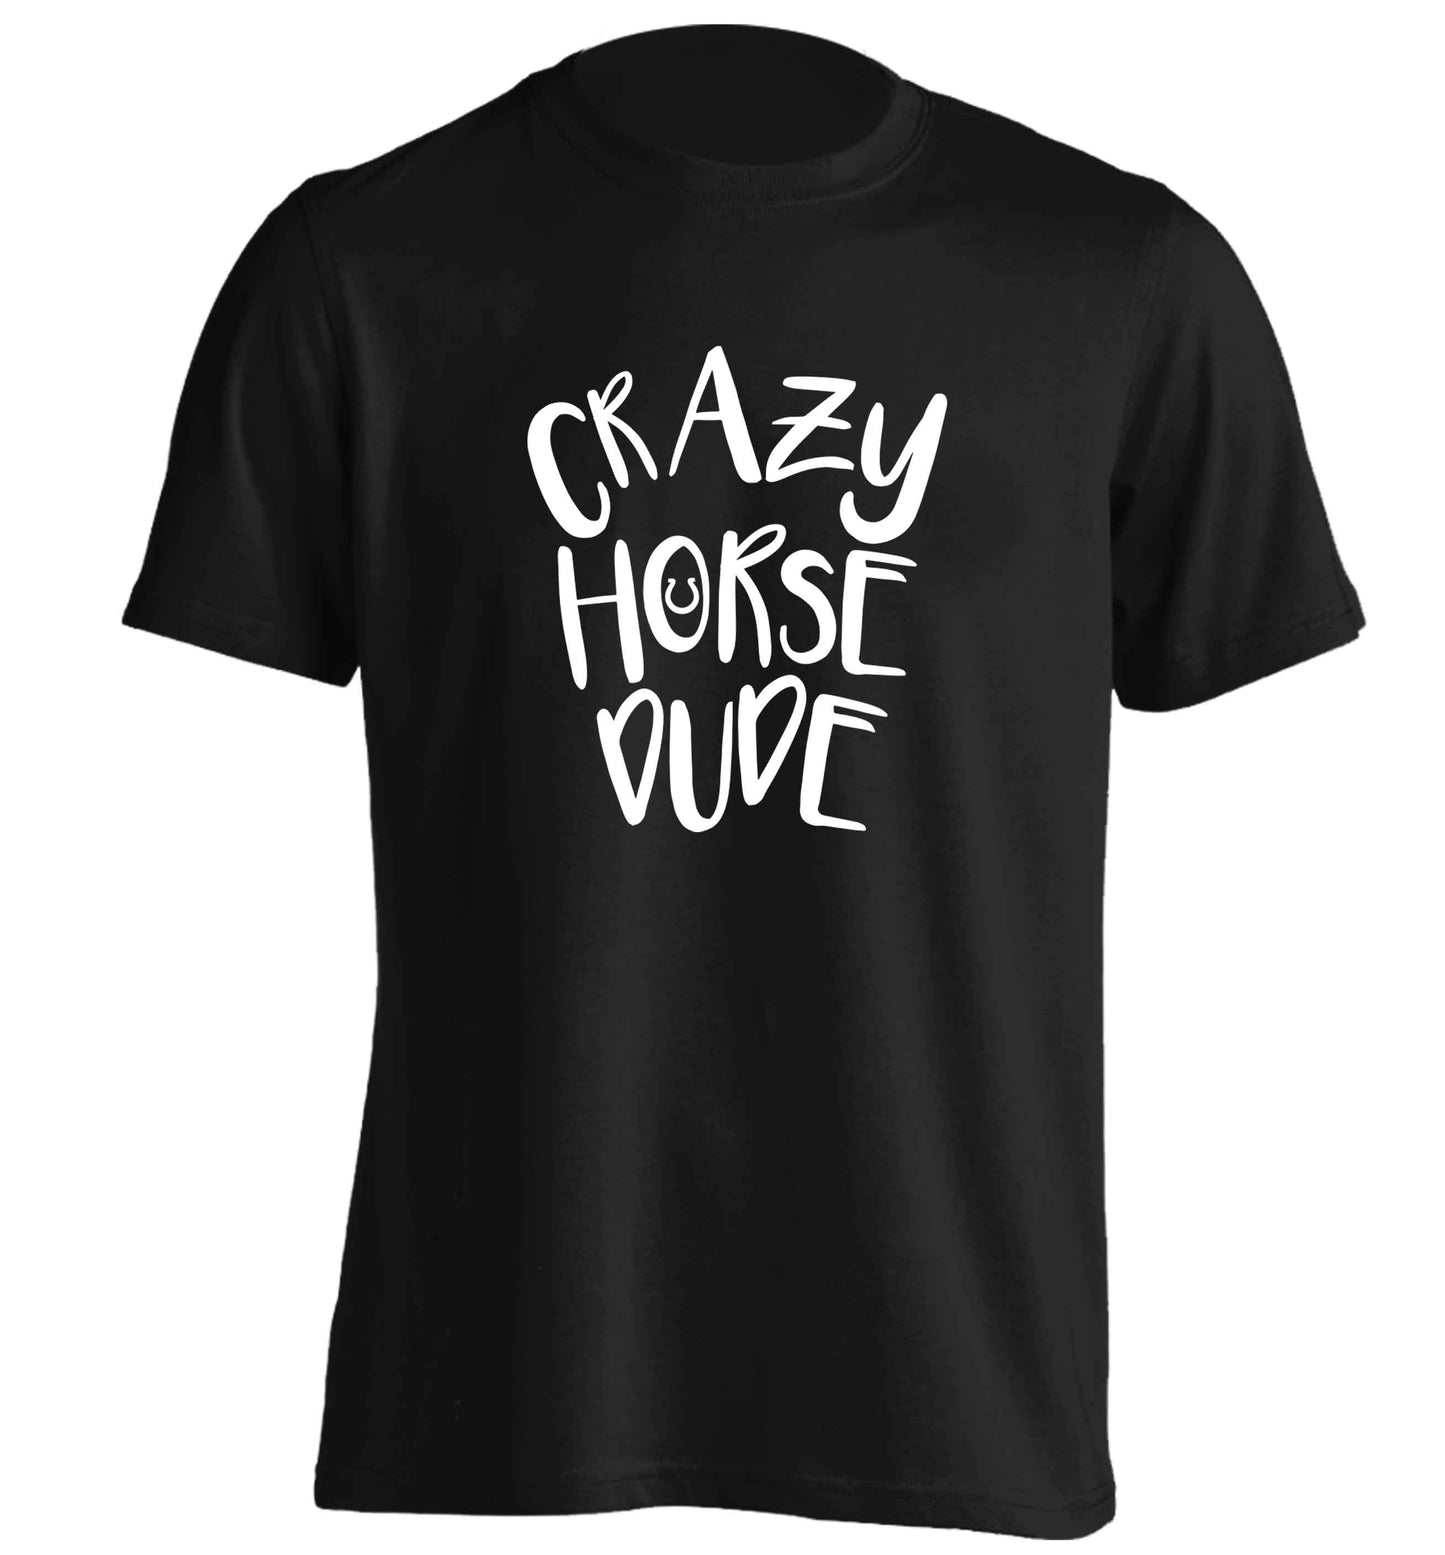 Crazy horse dude adults unisex black Tshirt 2XL